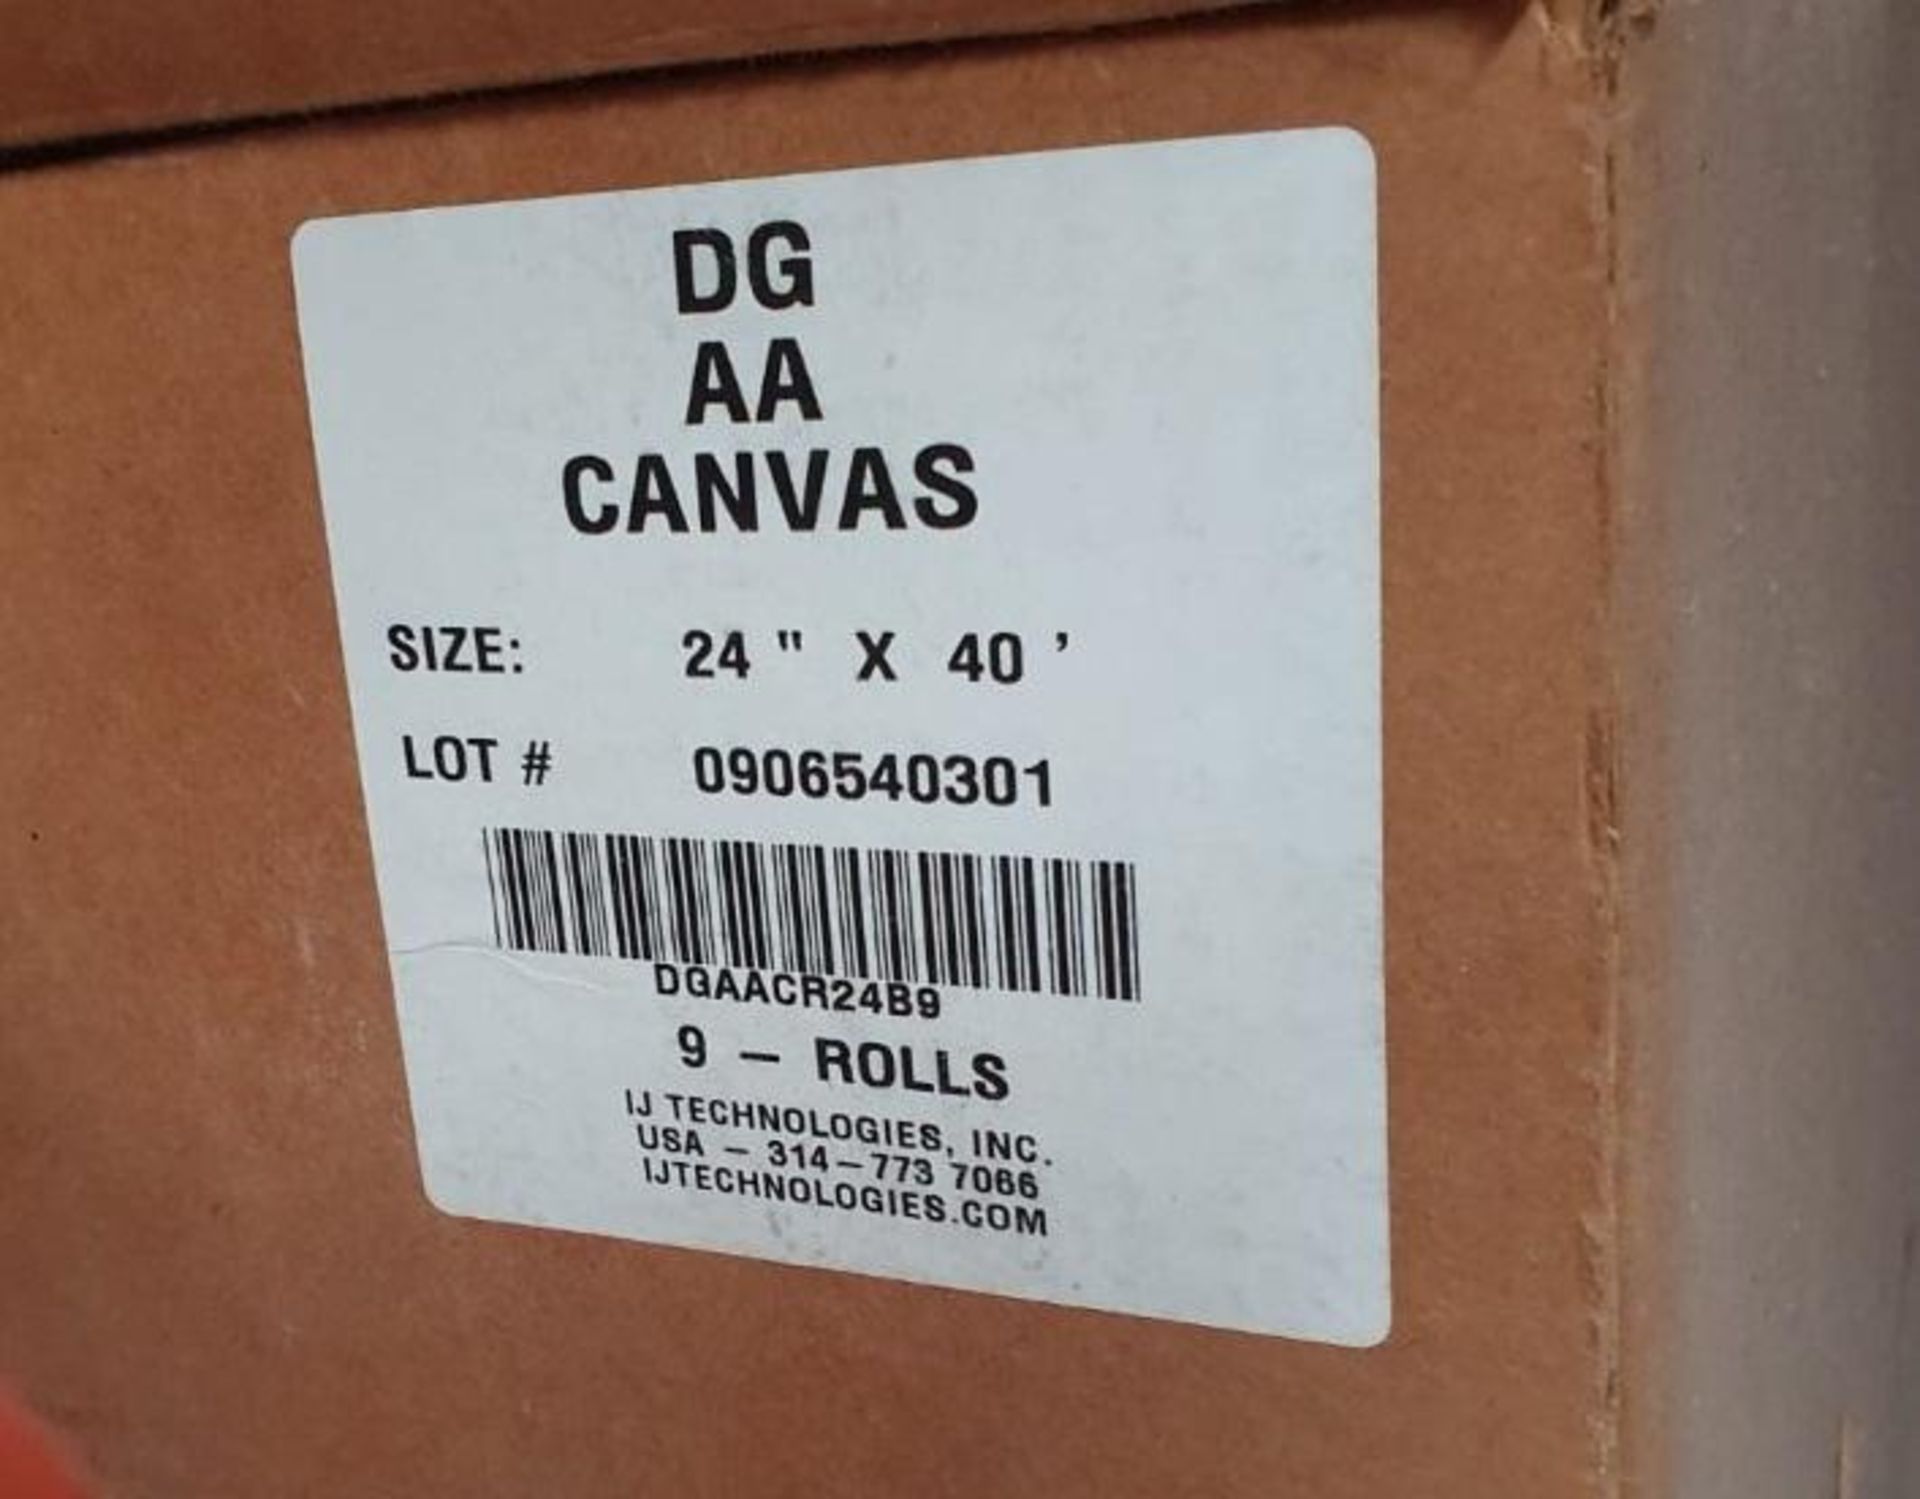 9 x Rolls Of Premium DG AA Canvas - 24" x 40' Rolls - Unused Boxed Stock - Low Start, No Reserve - - Image 3 of 3